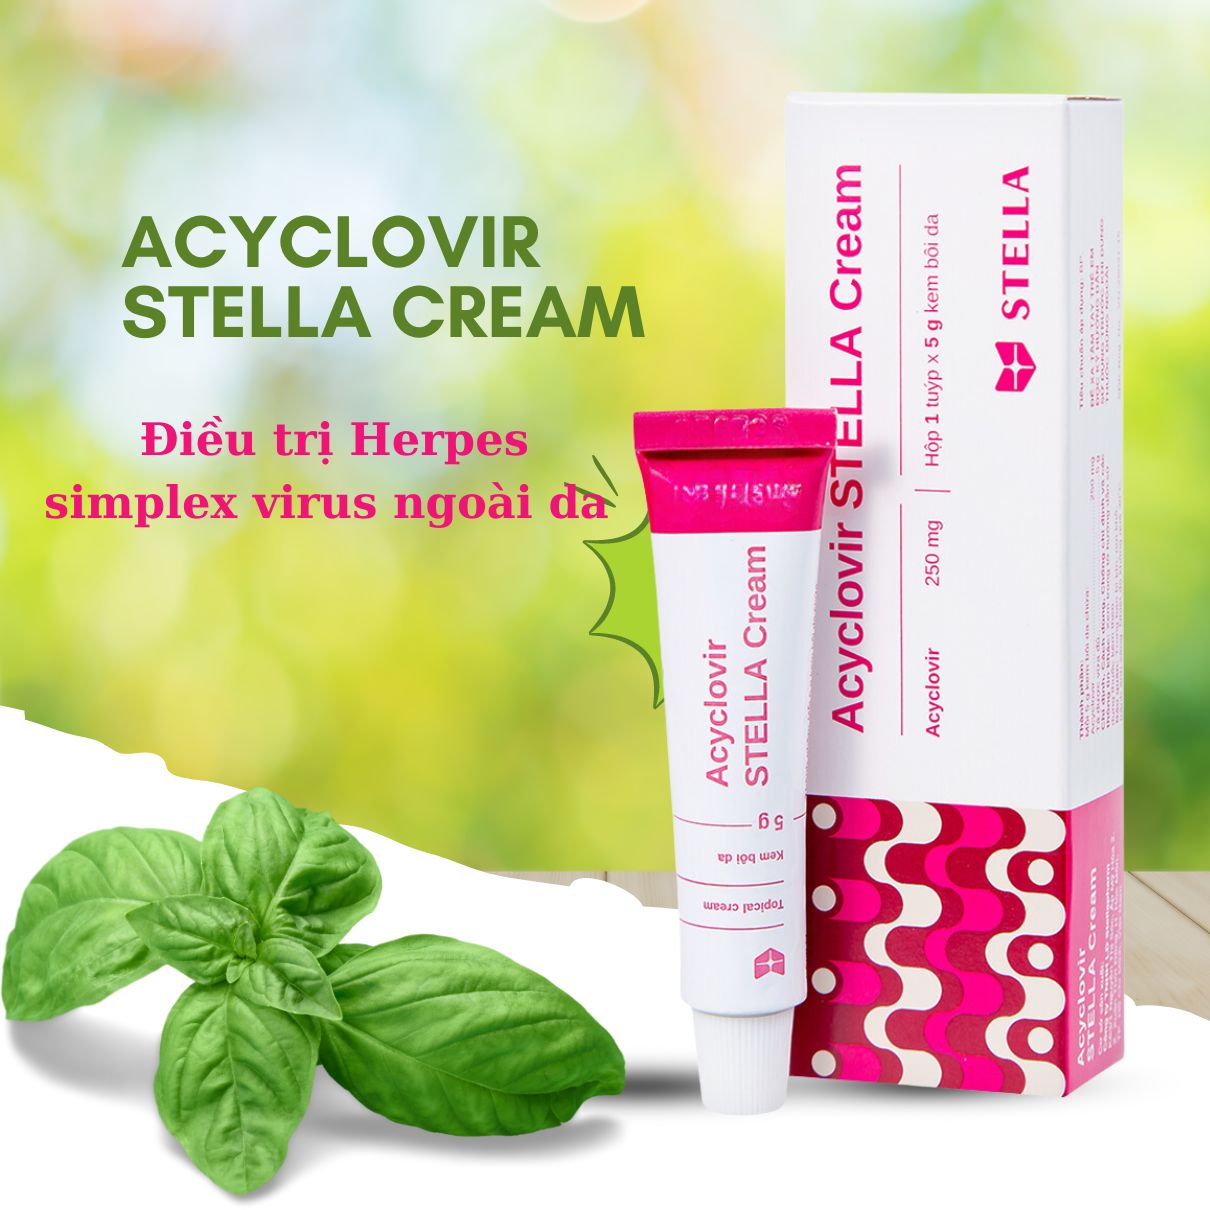 Acyclovir STELLA Cream